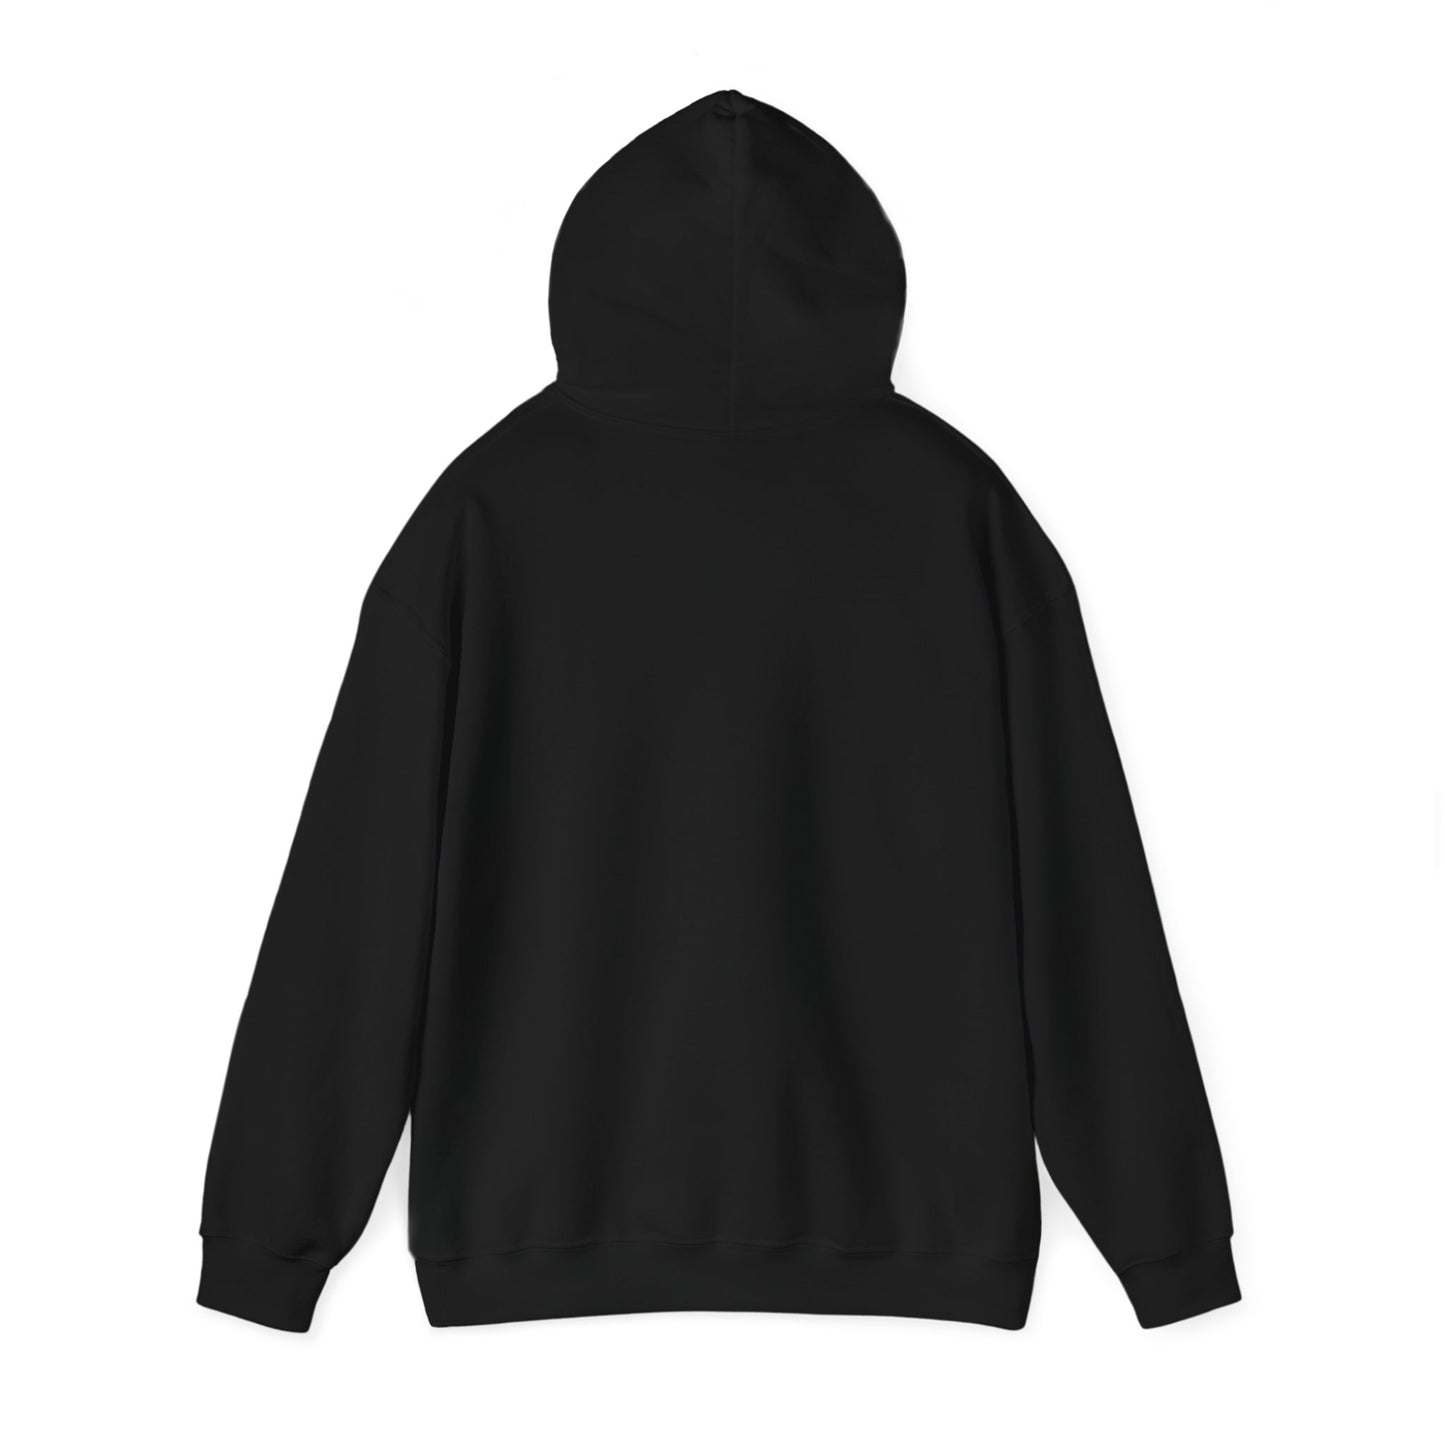 AEC Growth Professionals Day Unisex Heavy Blend™ Hooded Sweatshirt